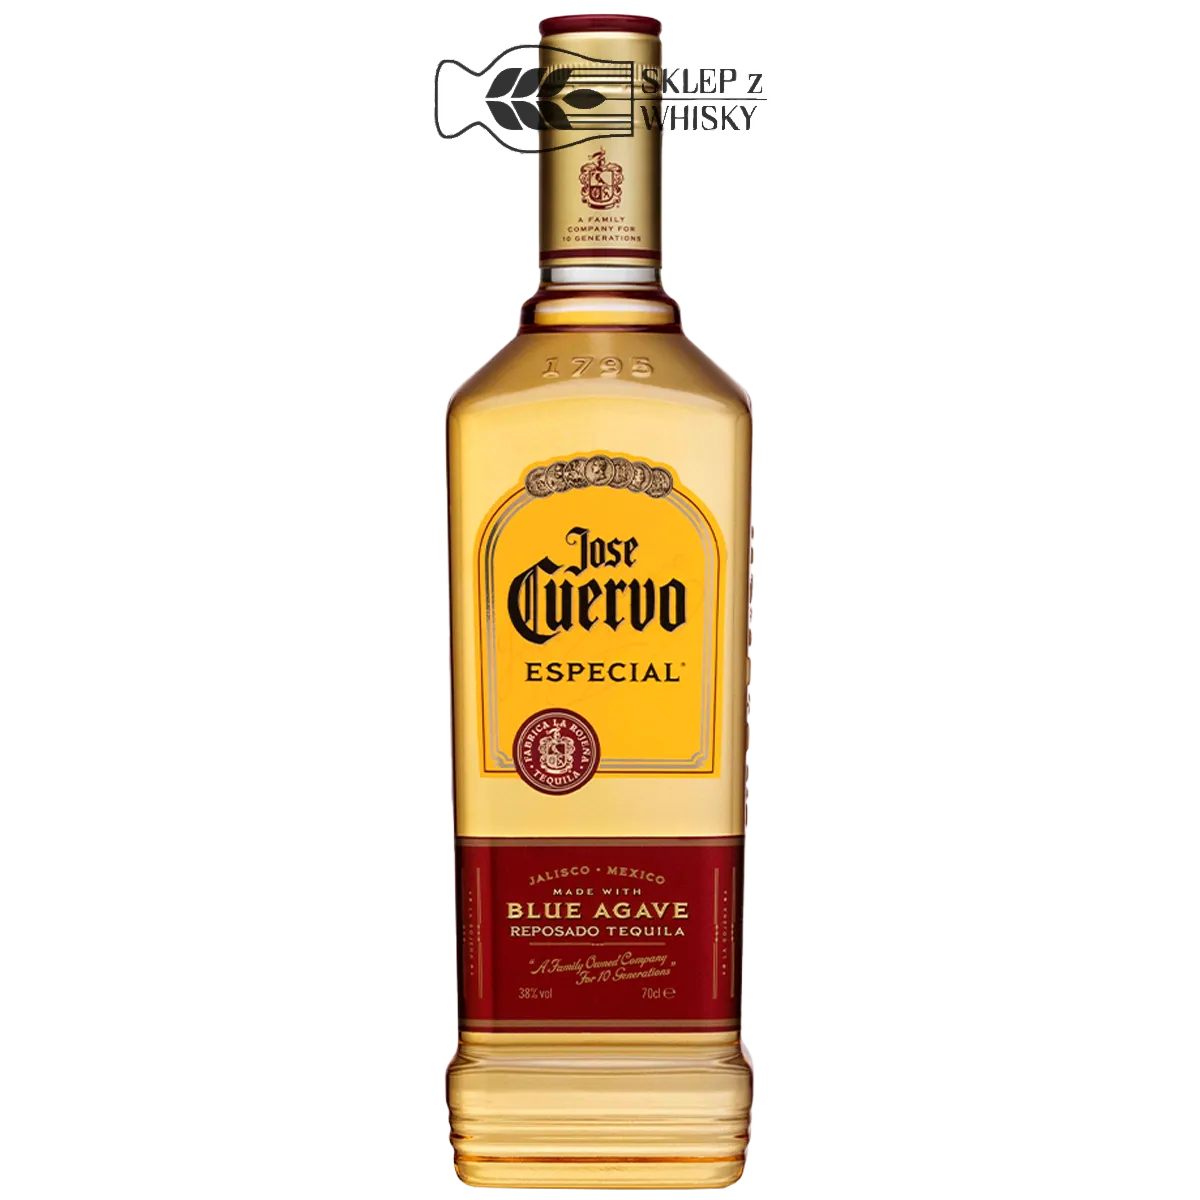 Jose Cuervo Especial Reposado — meksykańska tequila, butelka 700 ml